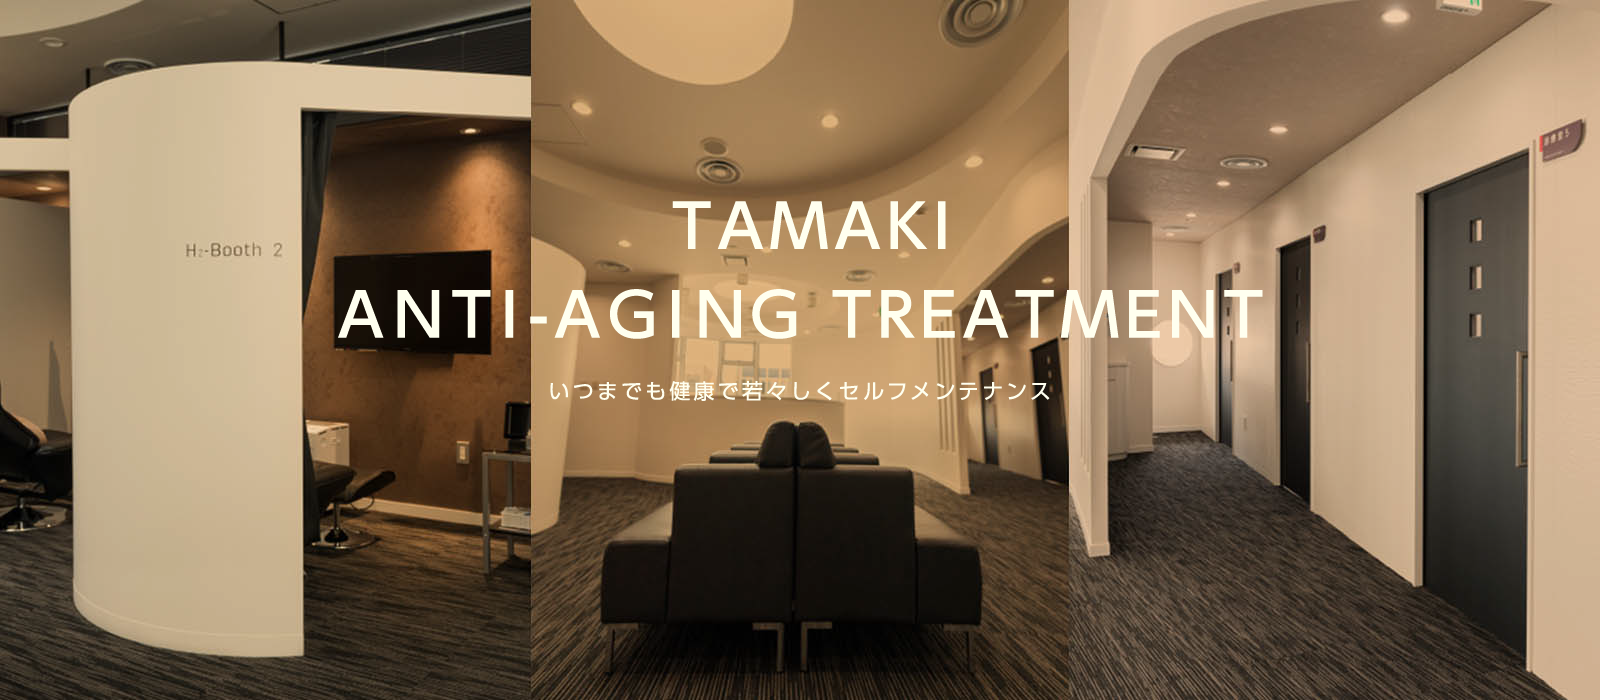 TAMAKI ANTI-AGING TREATMENT いつまでも健康で若々しくセルフメンテナンス